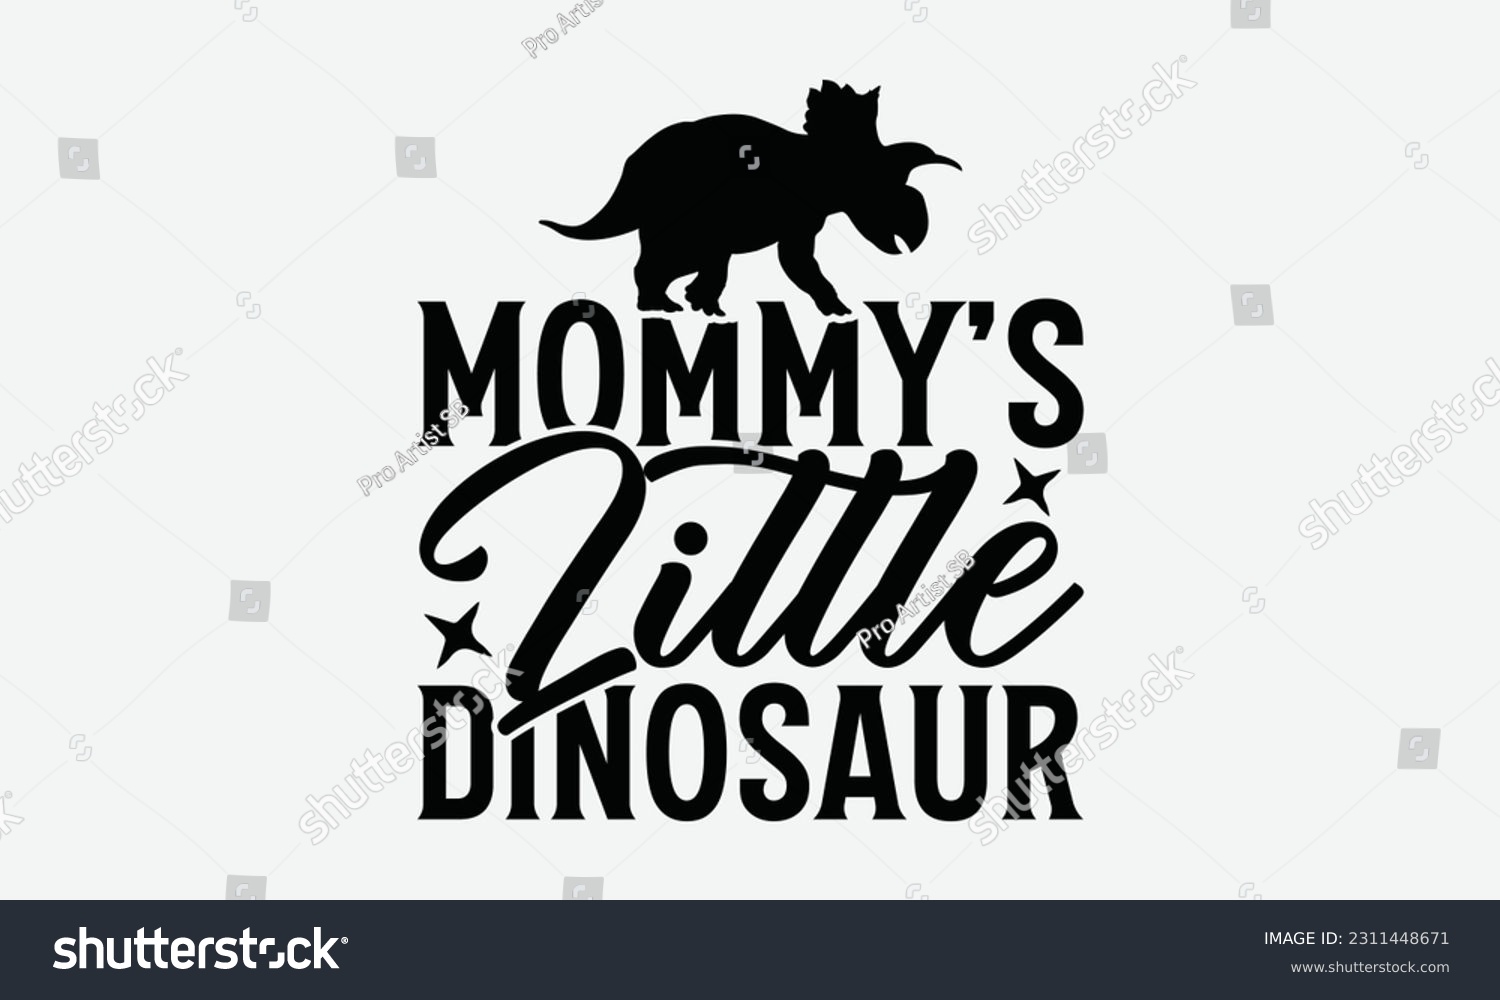 SVG of Mommy’s Little Dinosaur - Dinosaur SVG Design, Motivational Inspirational T-shirt Quotes, Hand Drawn Vintage Illustration With Hand-Lettering And Decoration Elements. svg